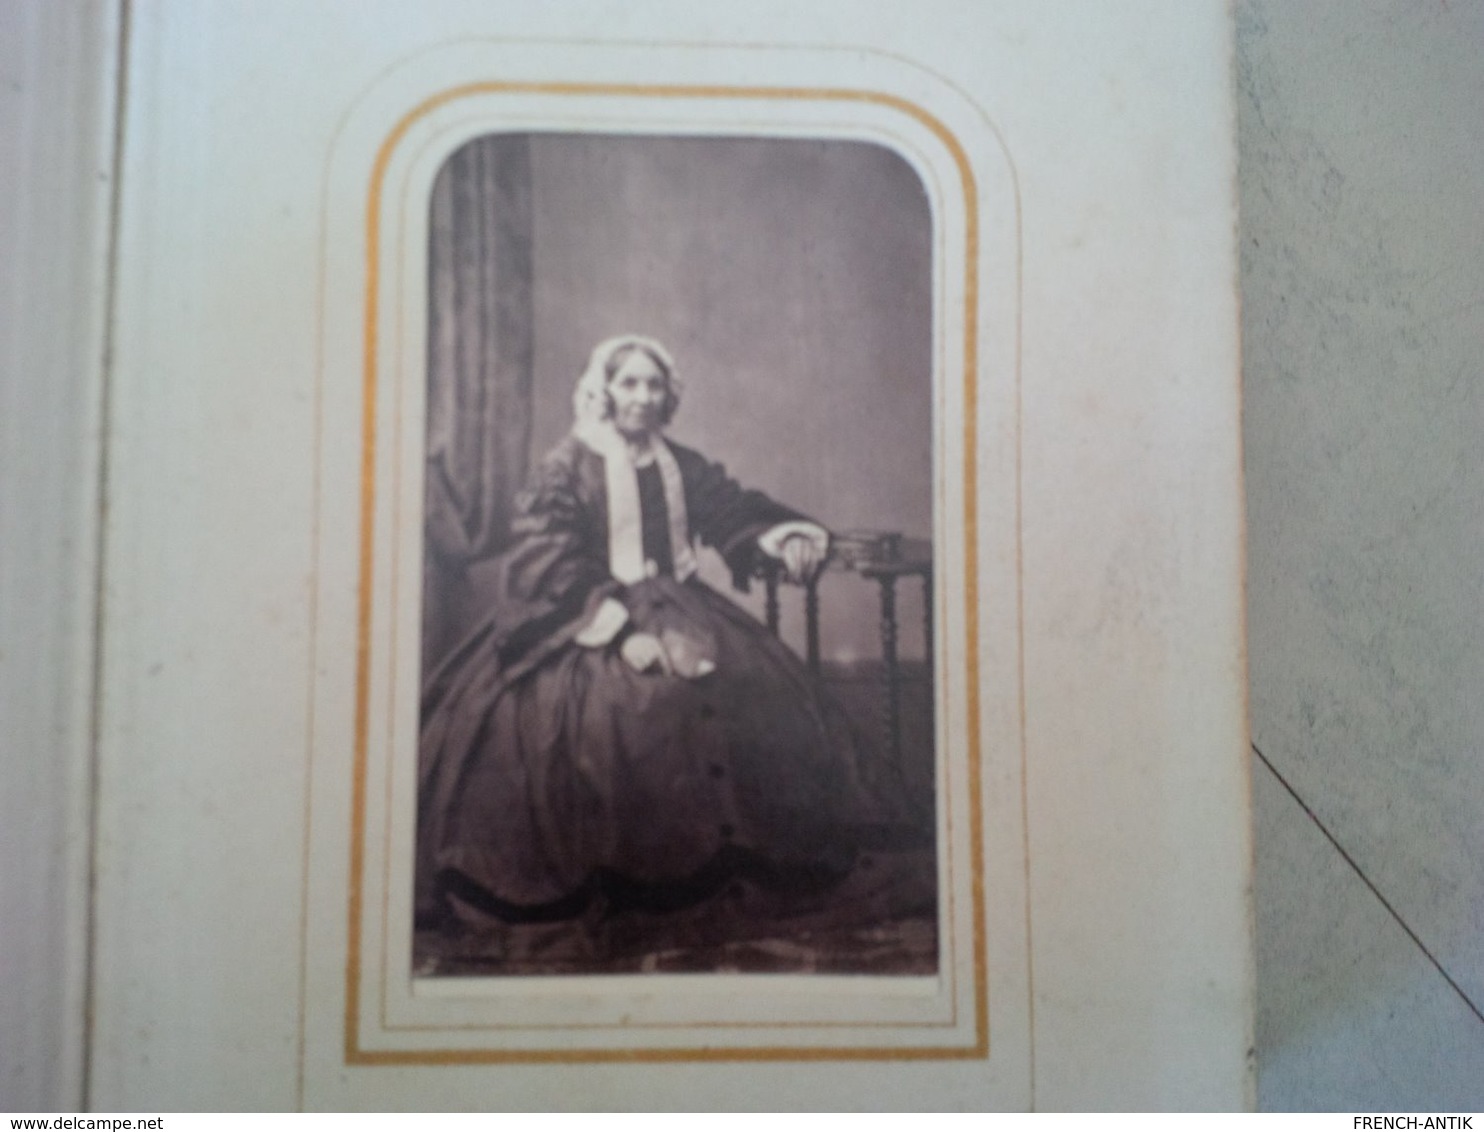 ALBUM PHOTO CDV ROYAUME UNI 1870 1880 PHOTOGRAPHE GAUBERT CILMOR THREDDERS MC LEAN AND HAES - Albums & Collections